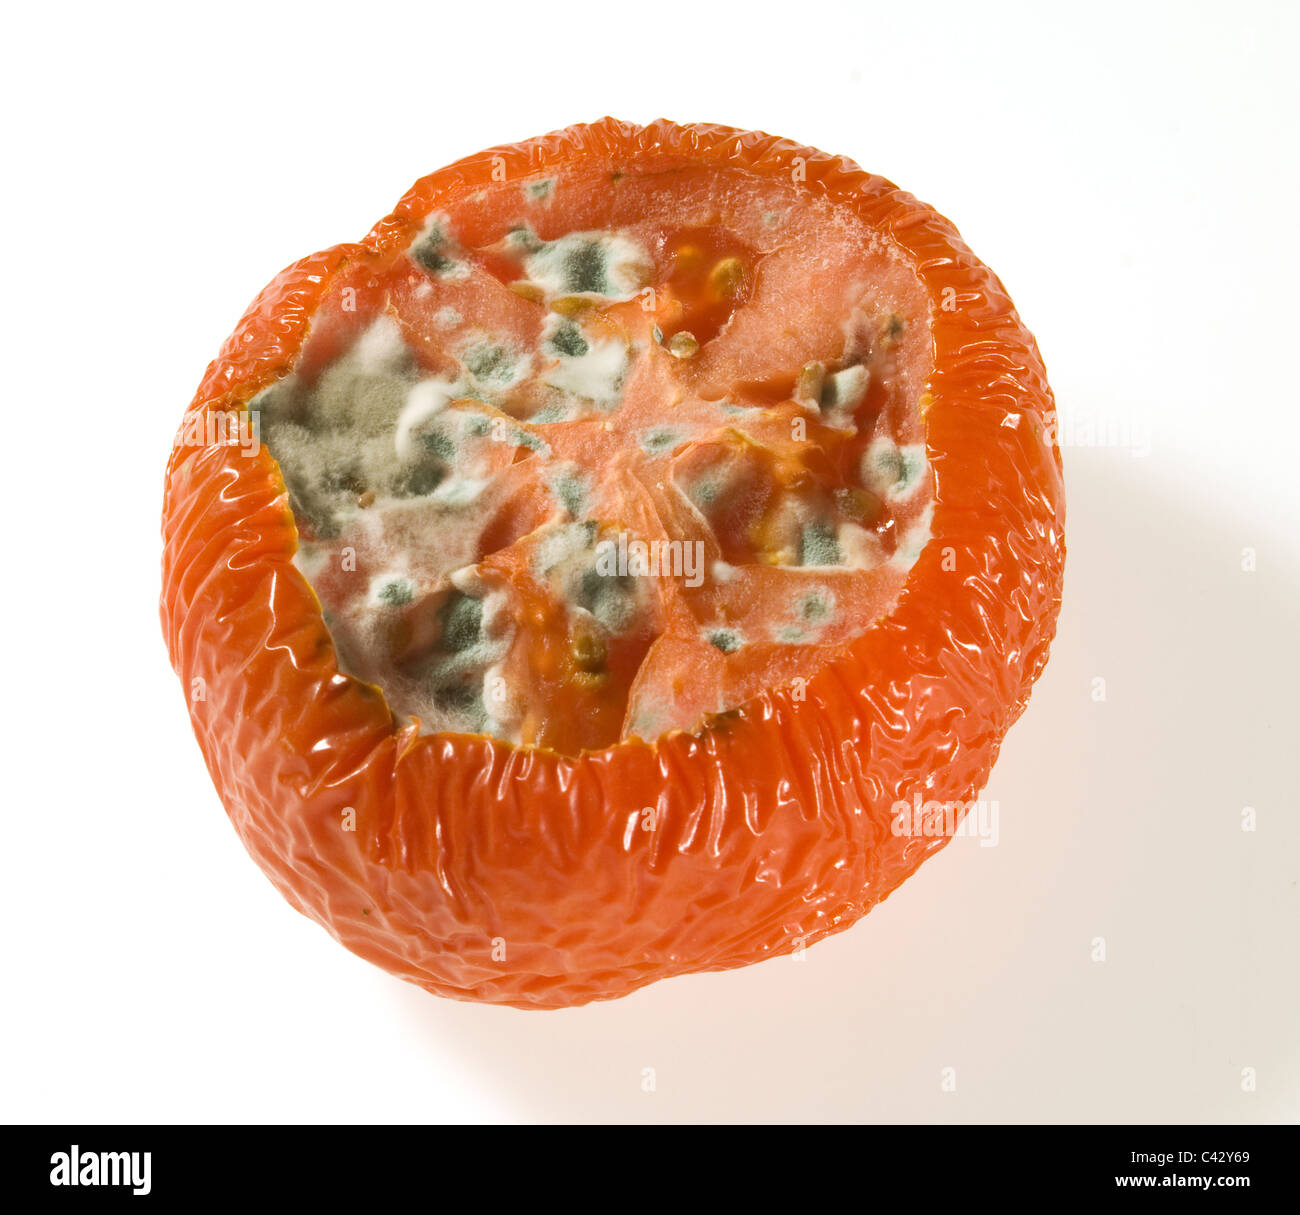 Old rotten Tomato on a white background Stock Photo